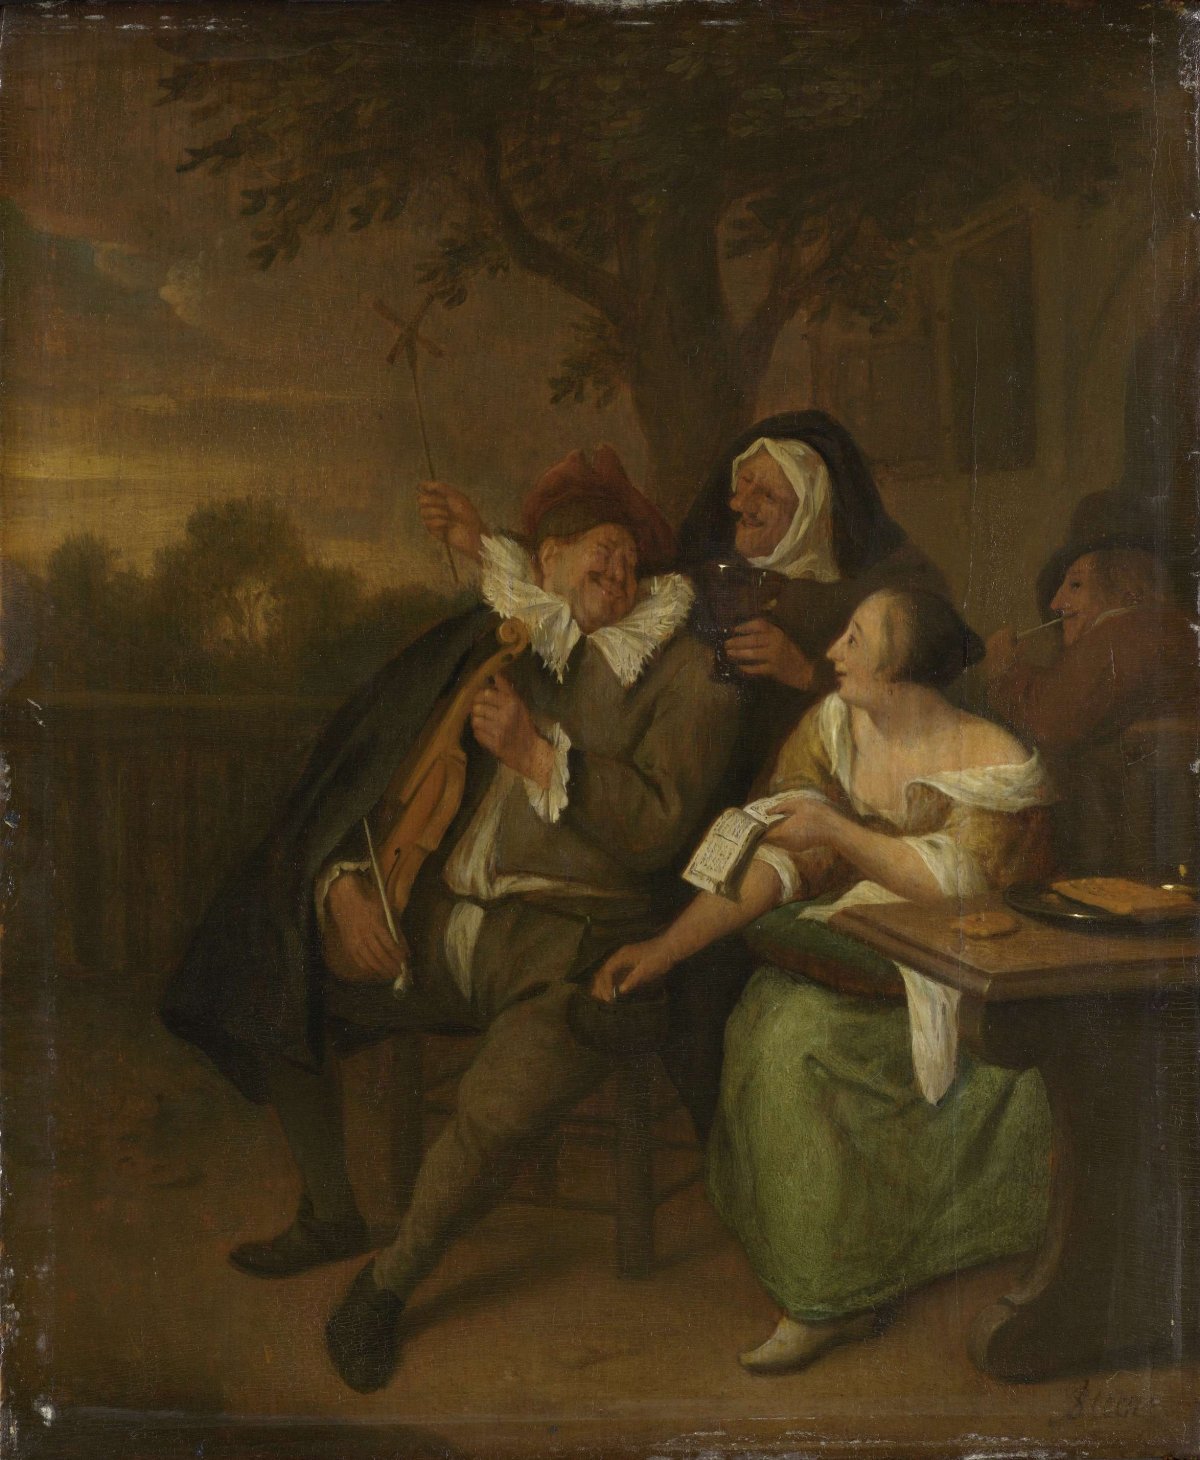 Man with a fiddle in bad company, Jan Havicksz. Steen, 1670 - 1700